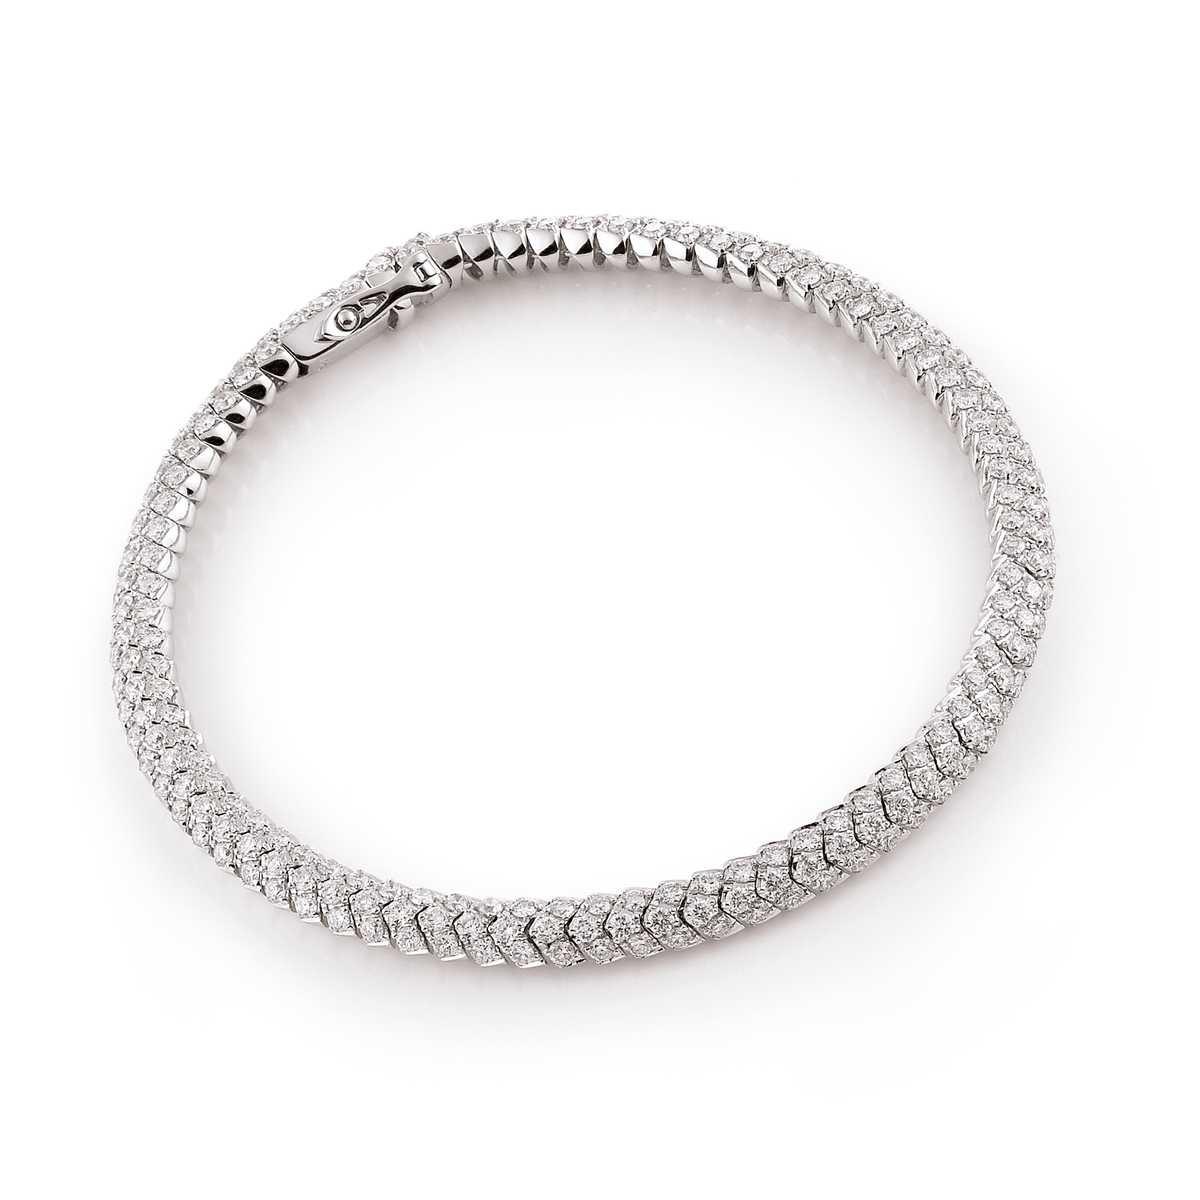 Al Coro Amori Bracelet in 18k White Gold with Diamonds - Orsini Jewellers NZ